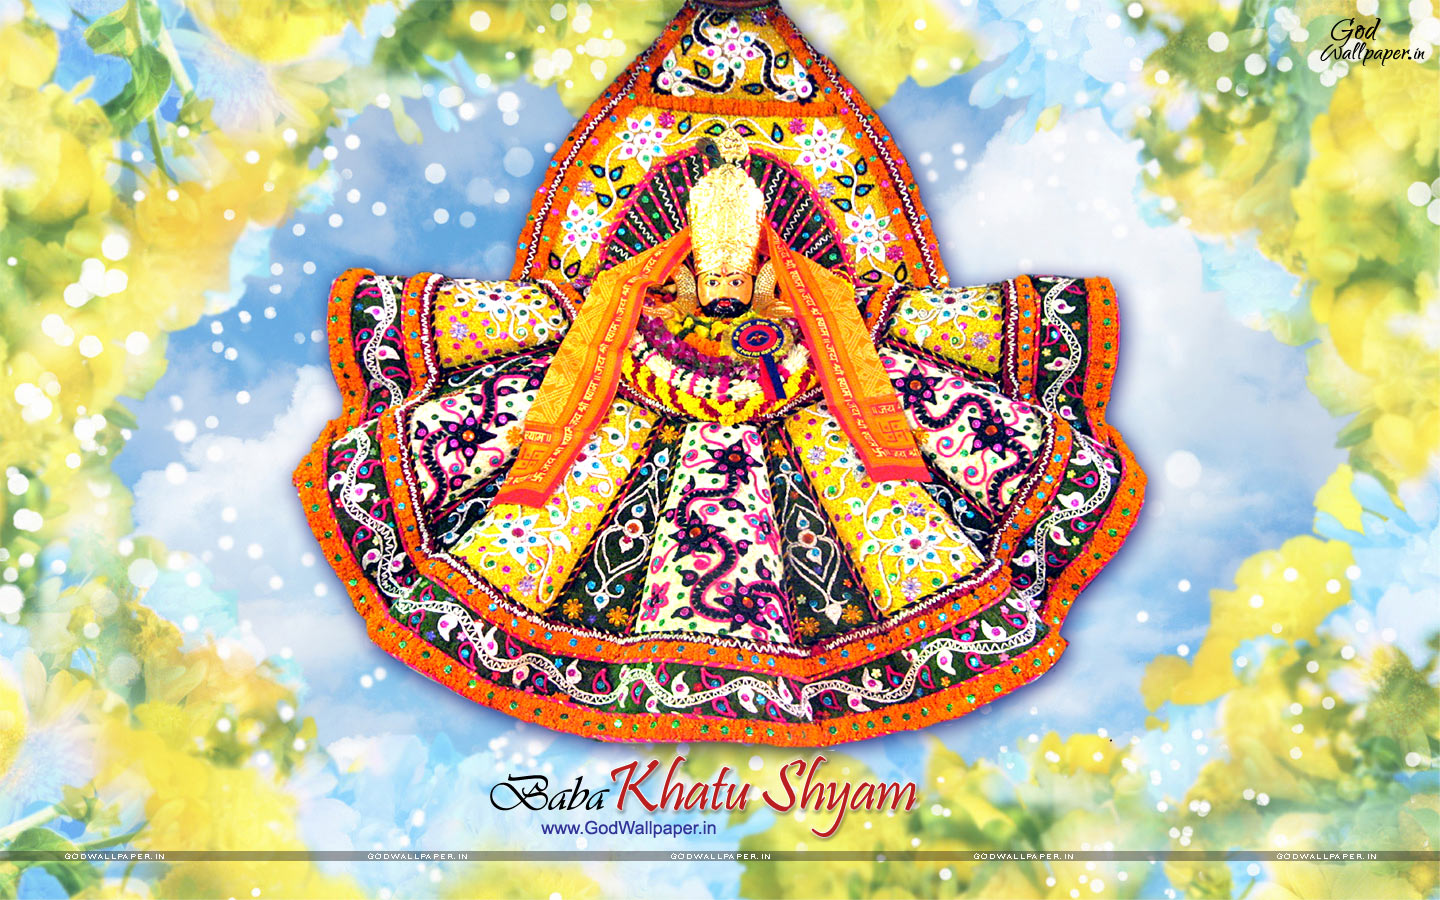 Shyam Baba Wallpapers Free Download